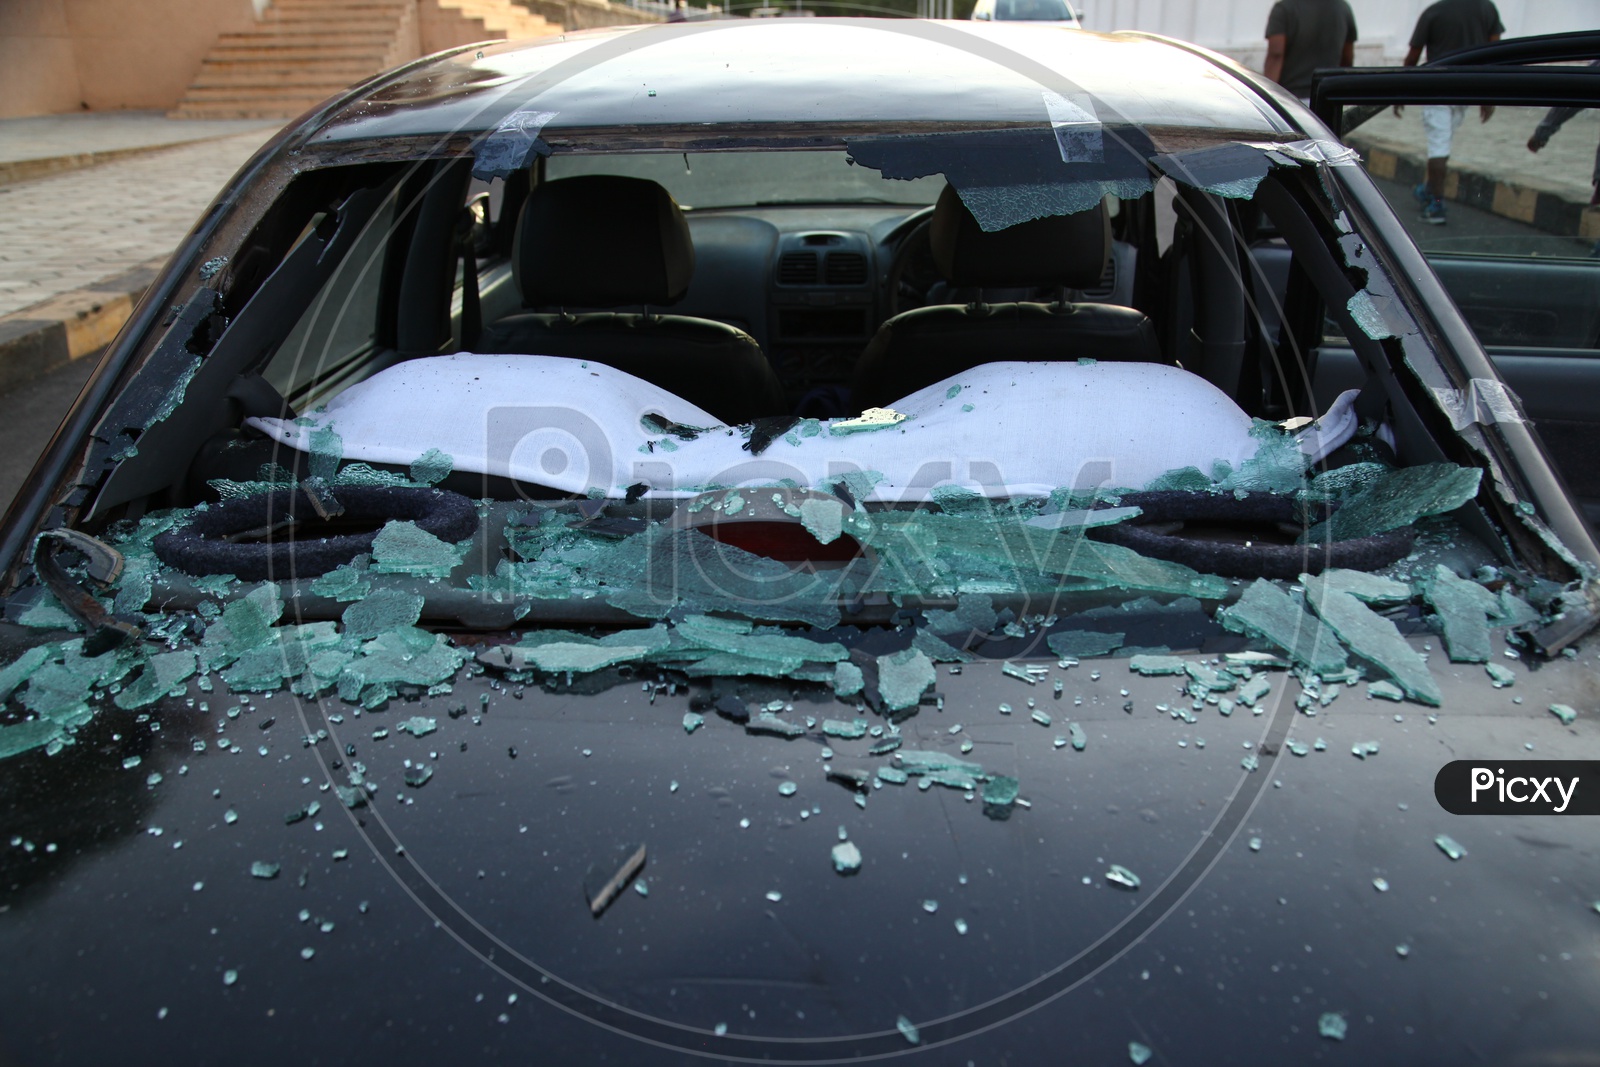 Broken windshield glass of the car